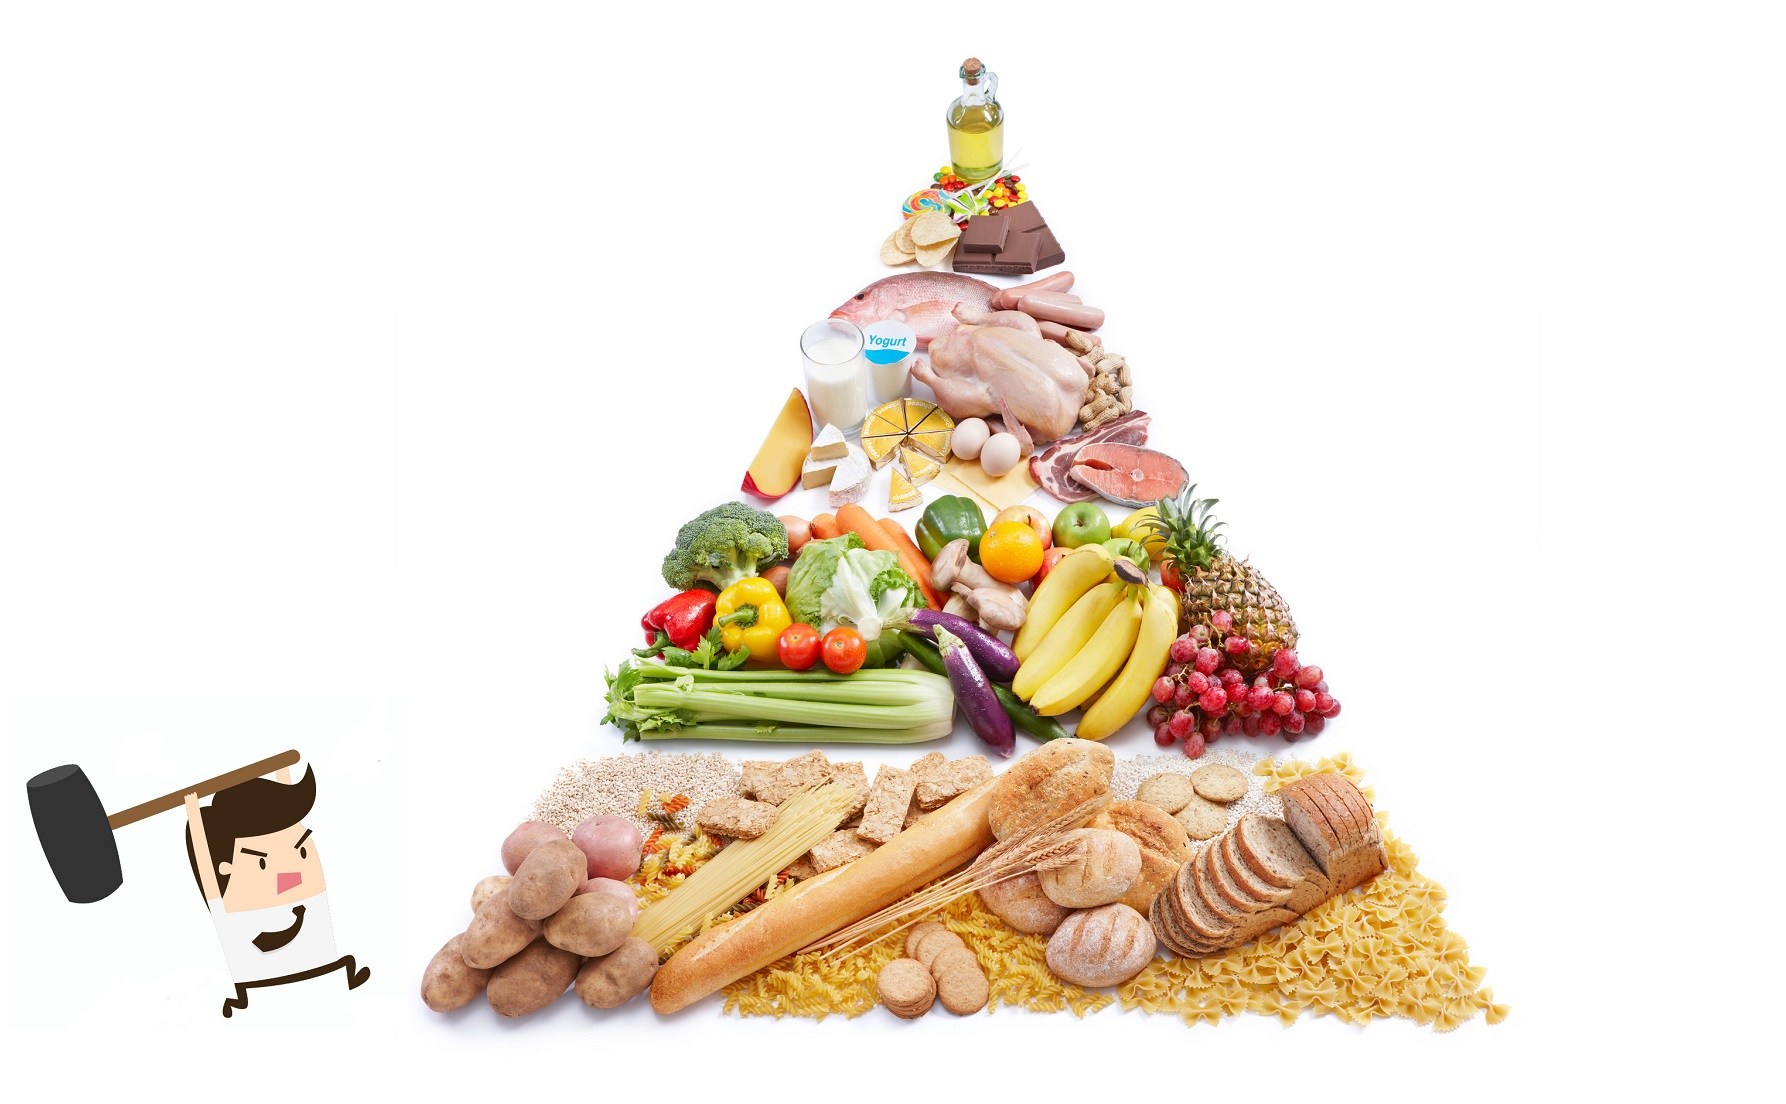 10 Reasons Why Grains Shouldn't Be at the Bottom of the Food Pyramid